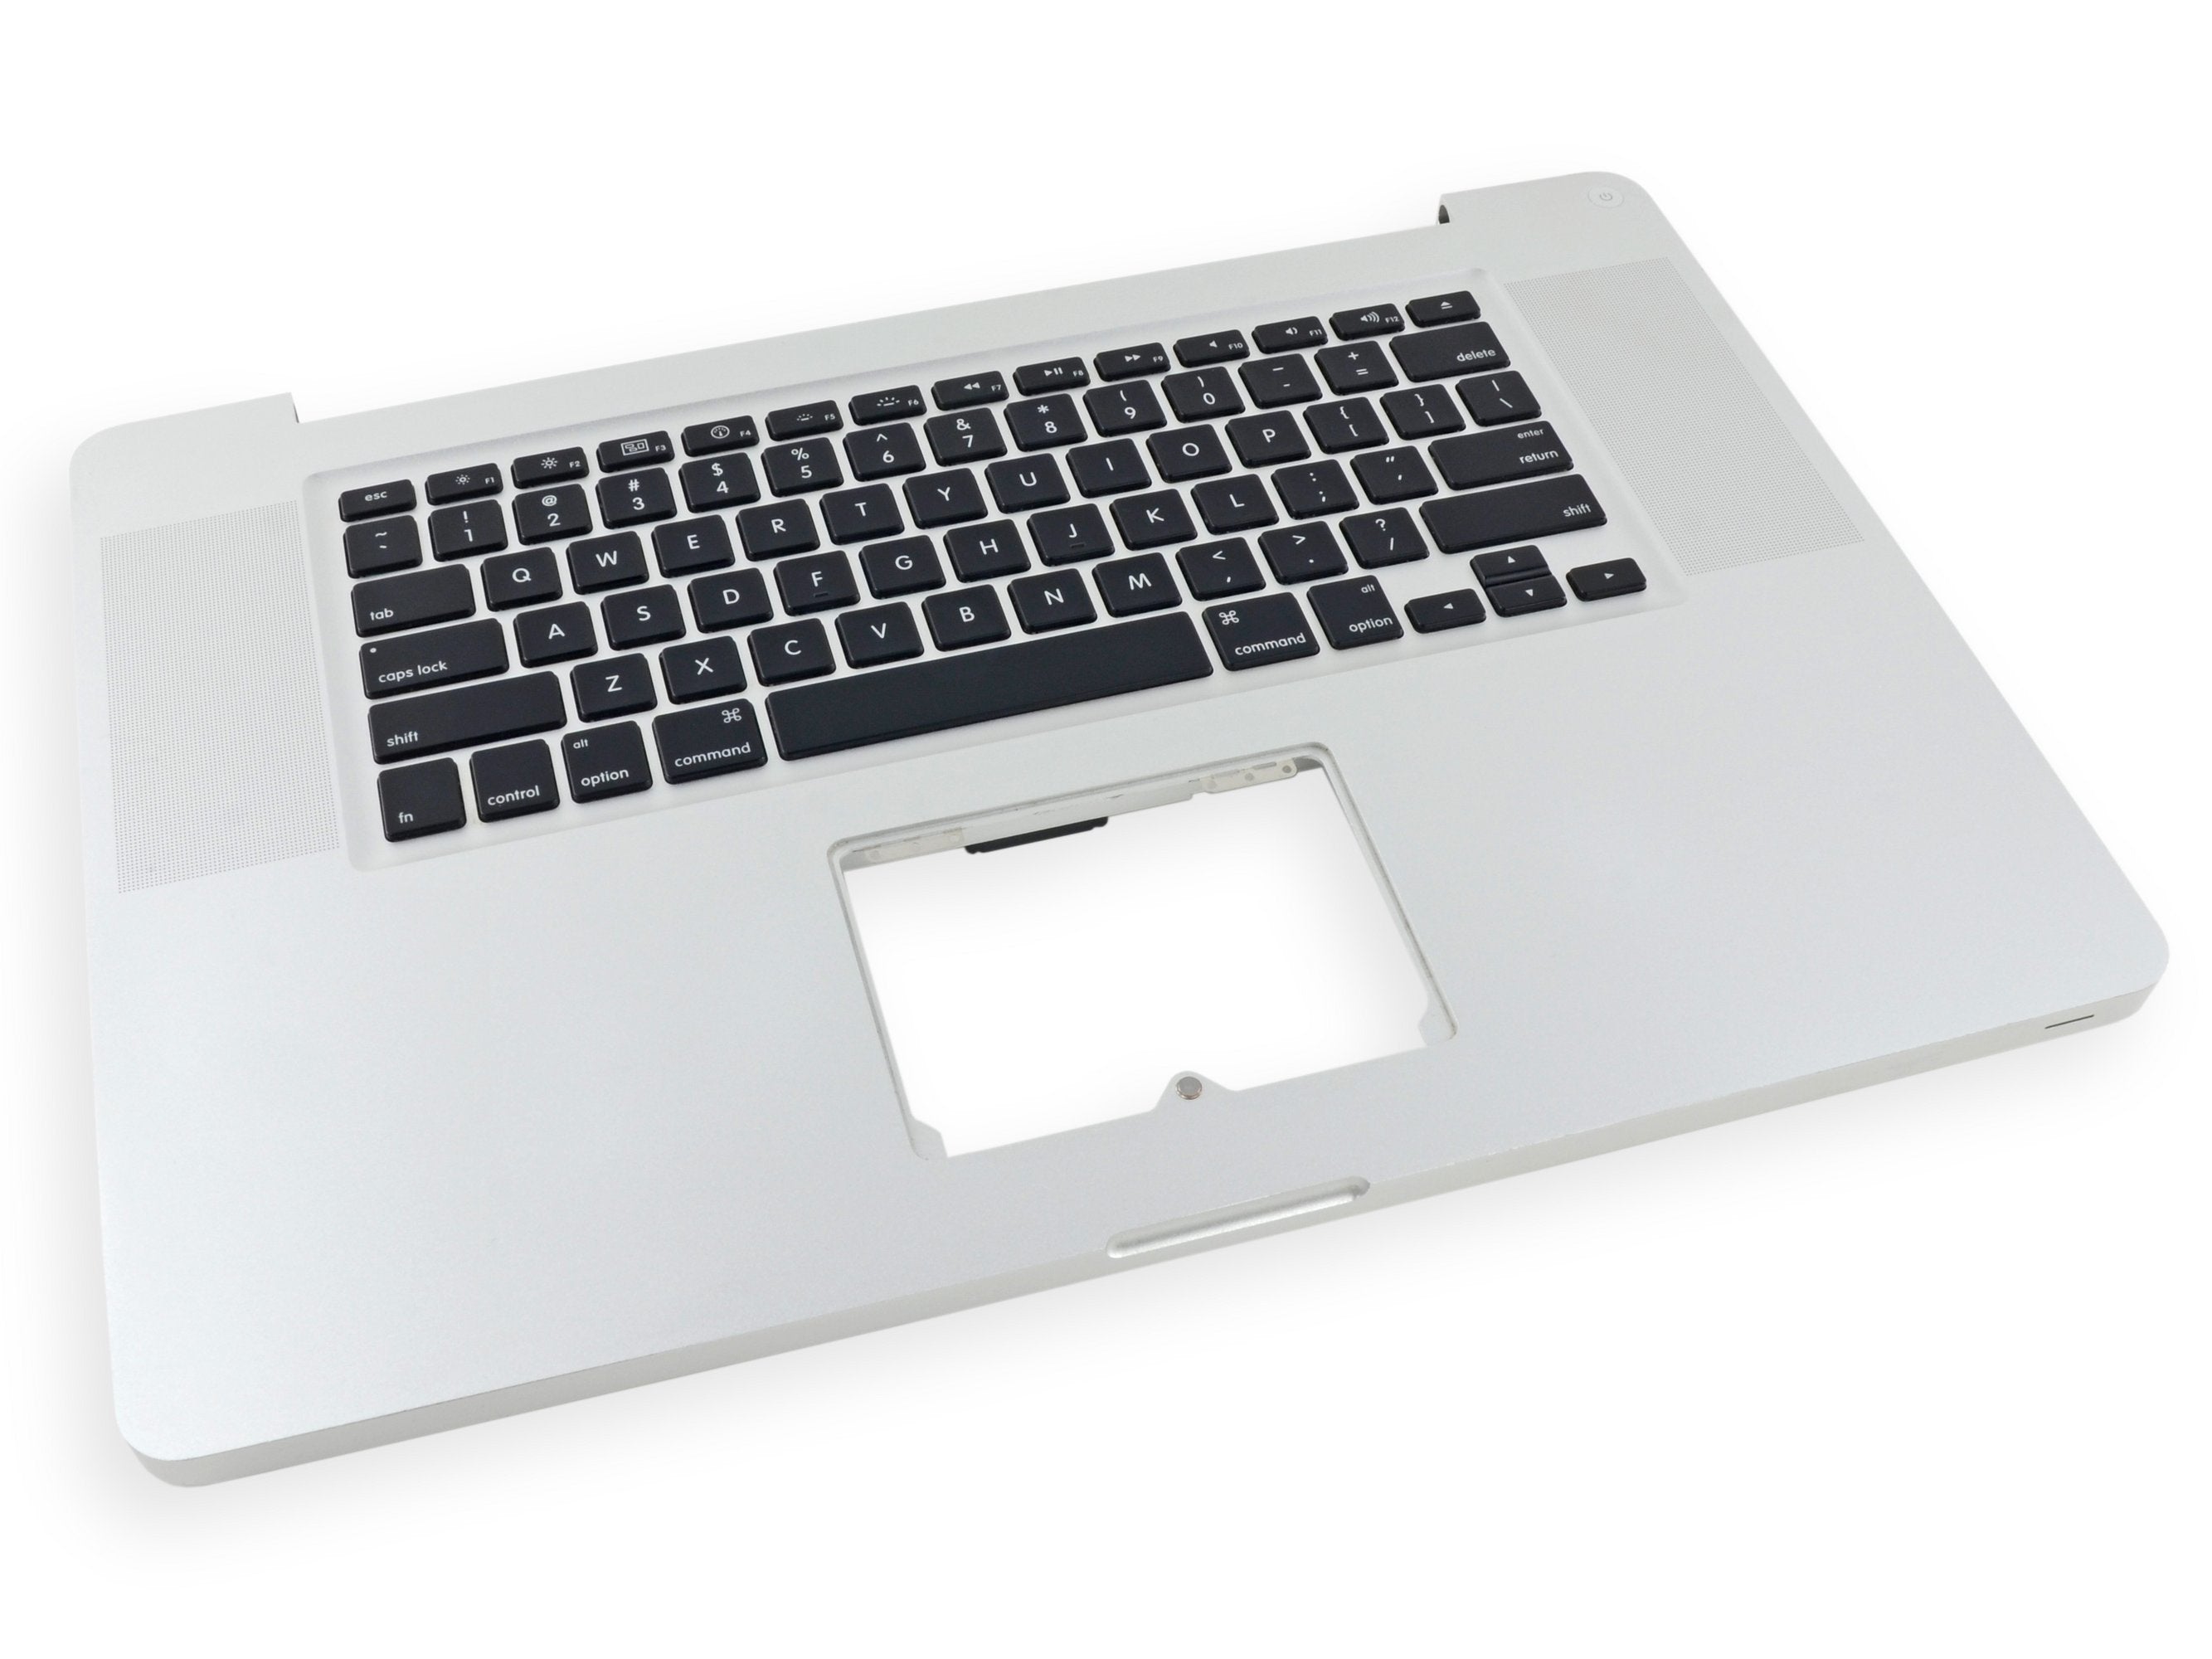 MacBook Pro 17" Unibody (Mid 2010) Upper Case